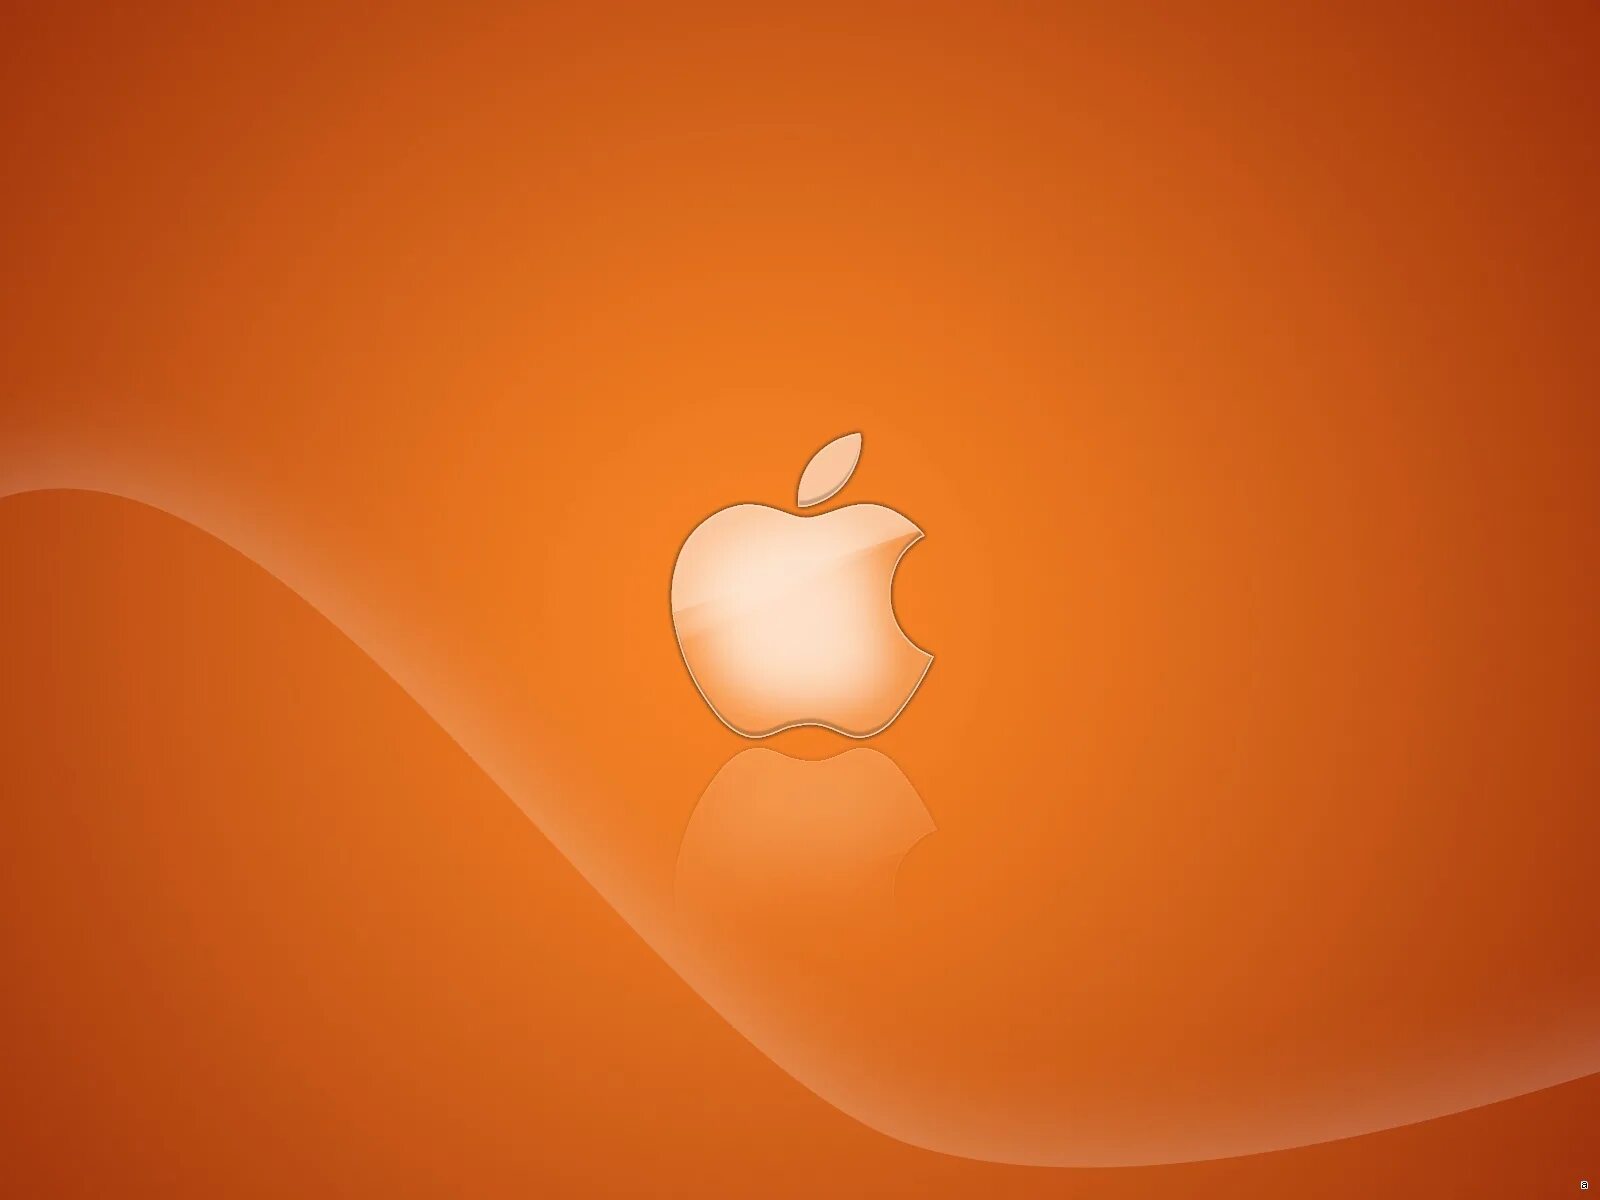 Обои эппл. Обои Apple. Заставка на рабочий стол Apple. Стандартные обои Apple. Оранжевый рабочий стол.